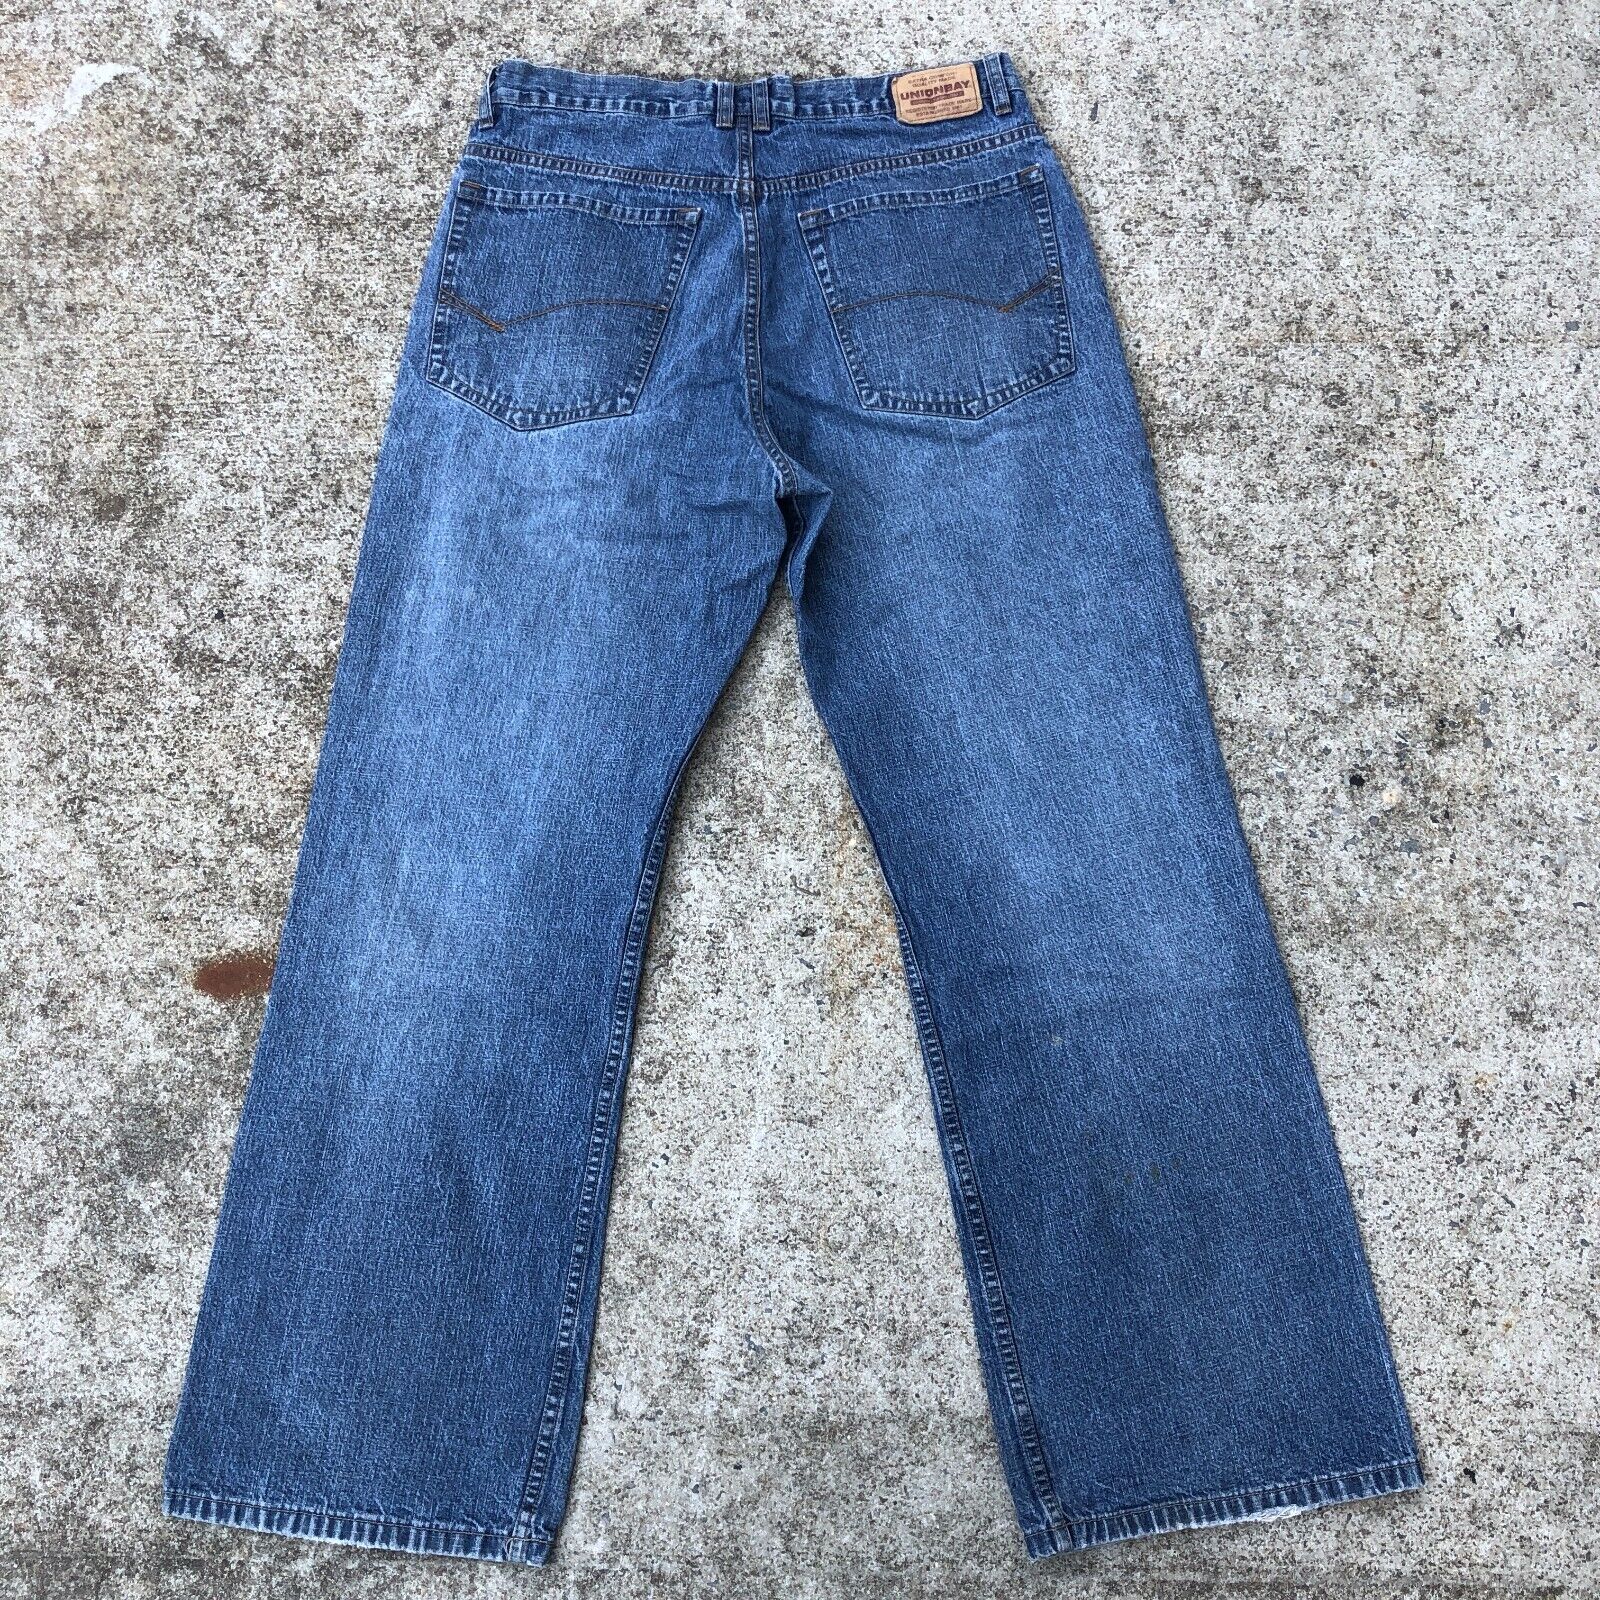 Vintage Union Bay Jeans Adult 33x32 Loose Baggy Bootcut Wide Leg Y2k Skater